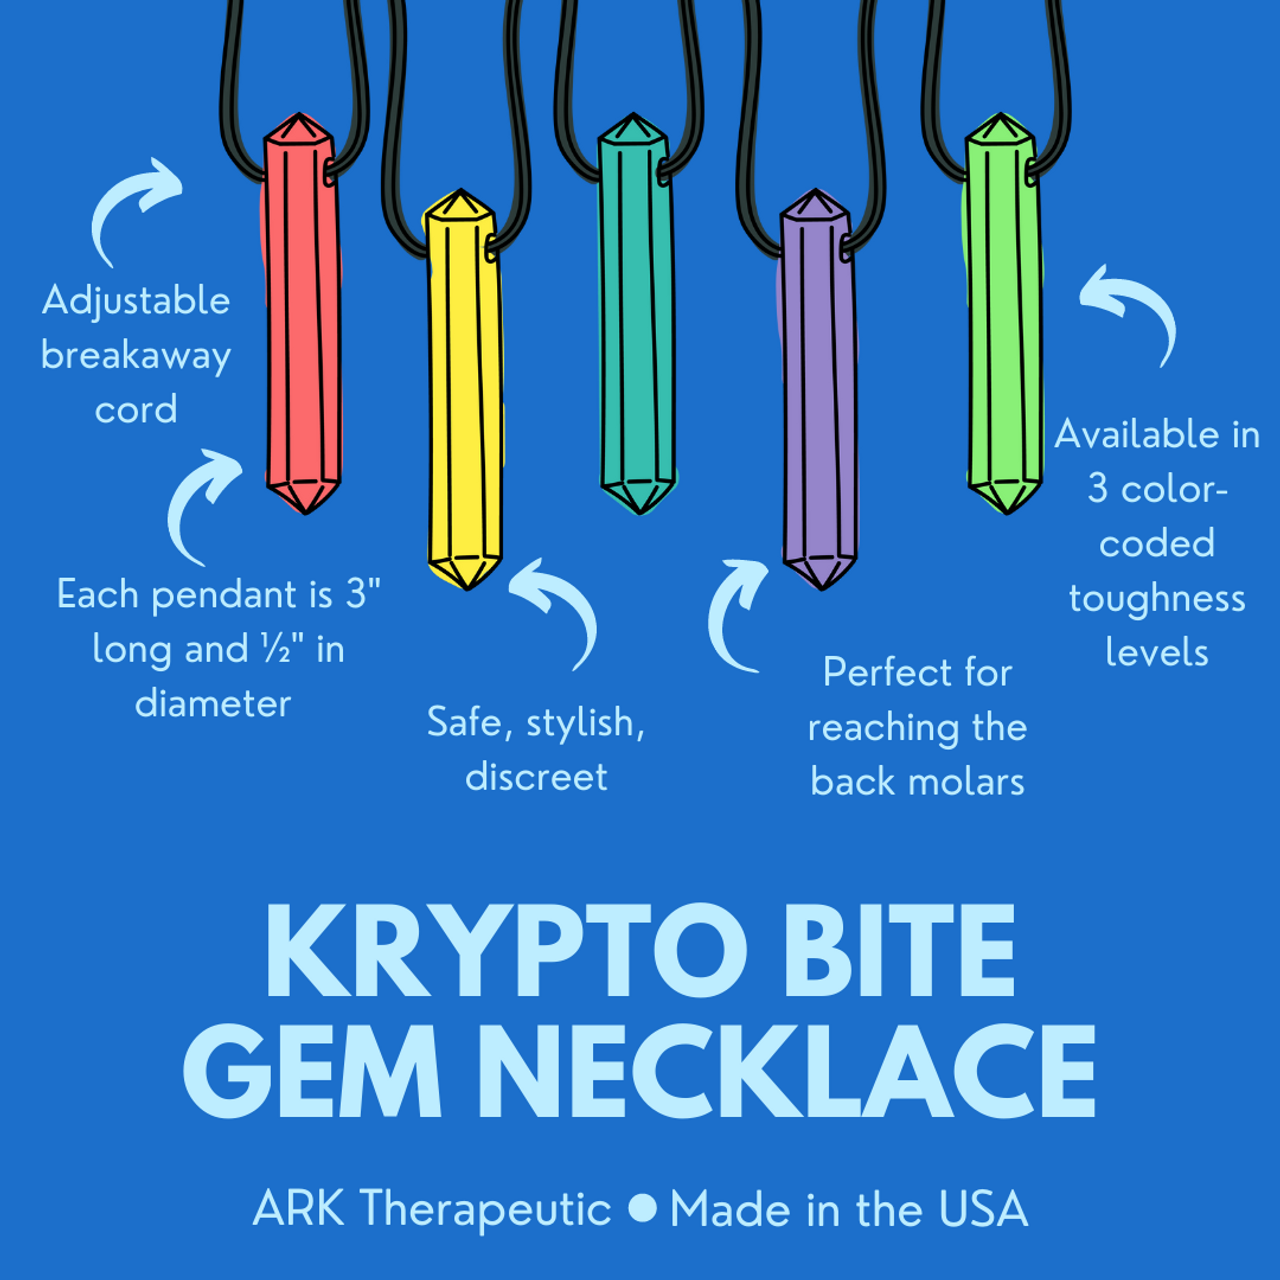 ARK's Krypto-Bite Chewable Gem Necklace